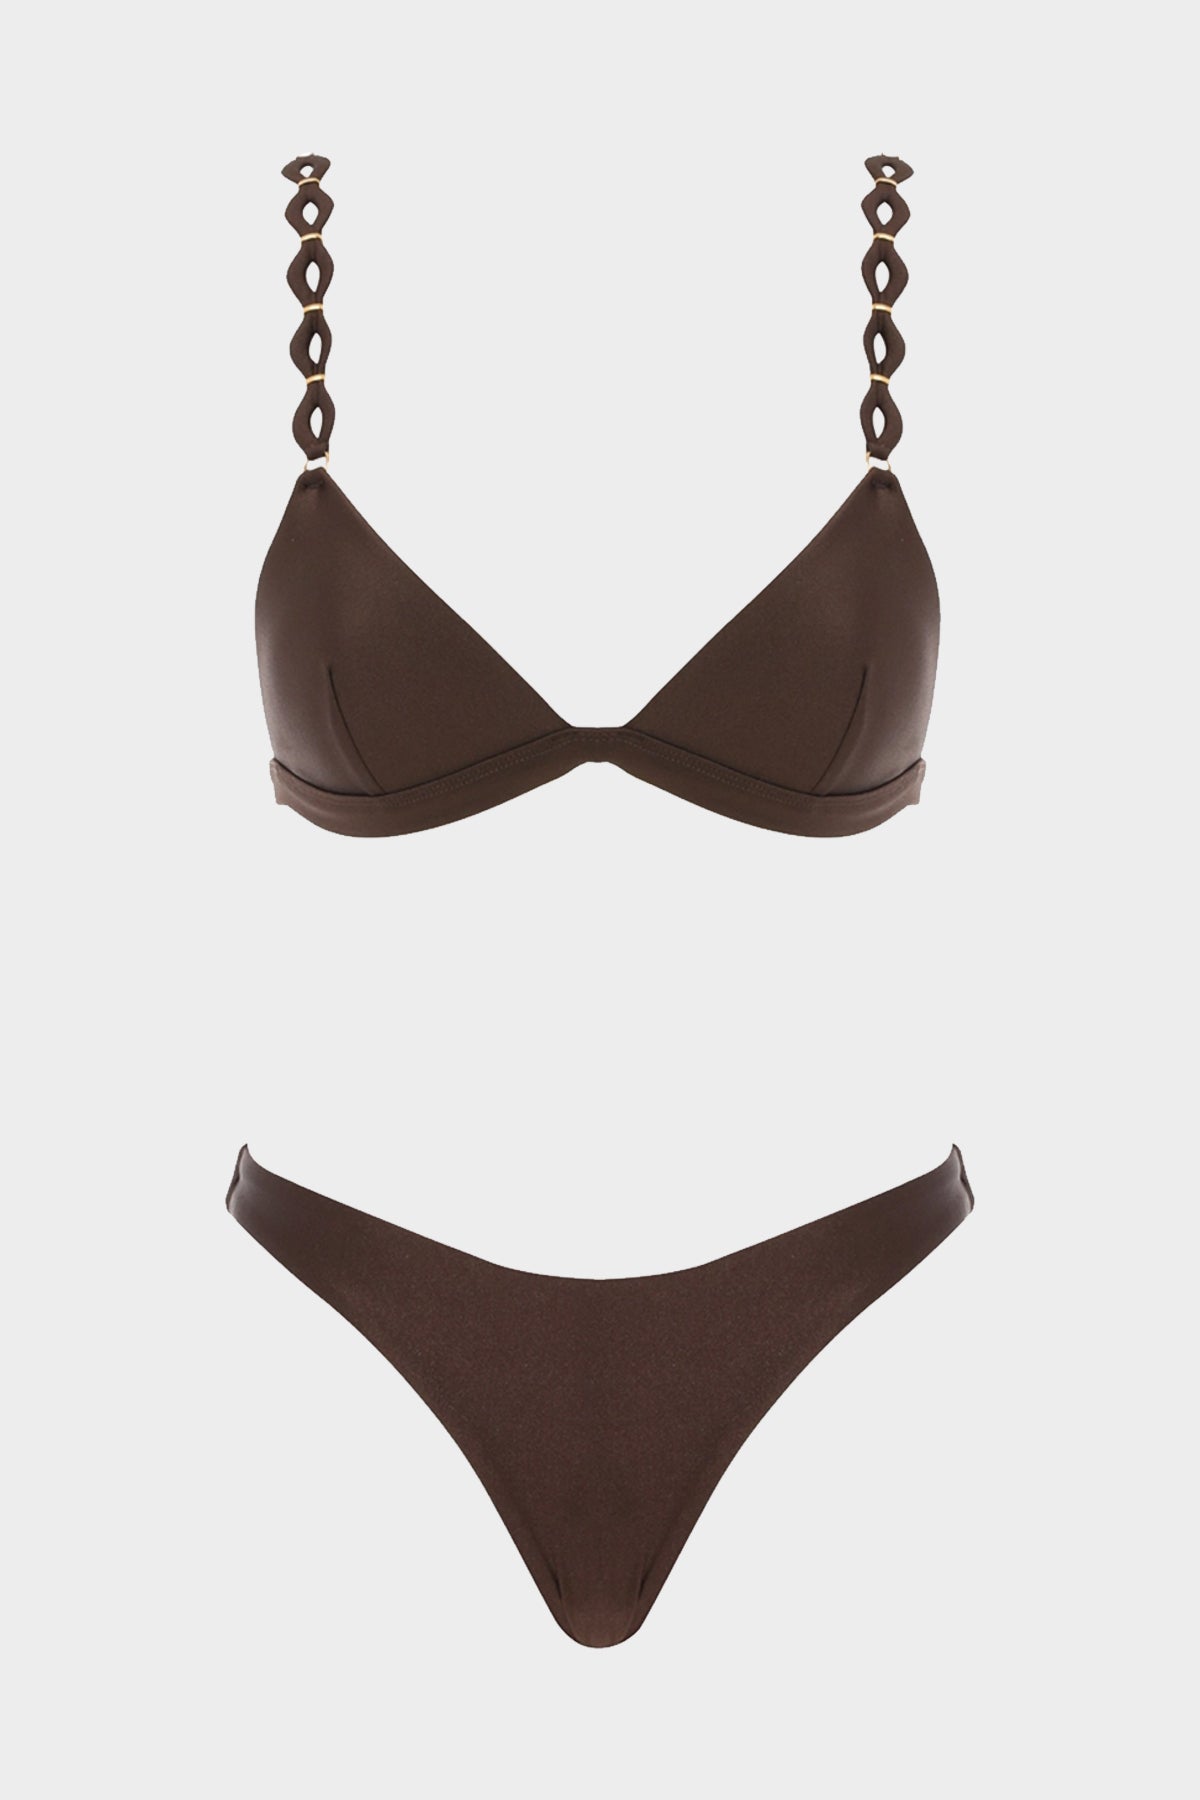 August Diamond Trim Tri Bikini Set in Chocolate - shop-olivia.com